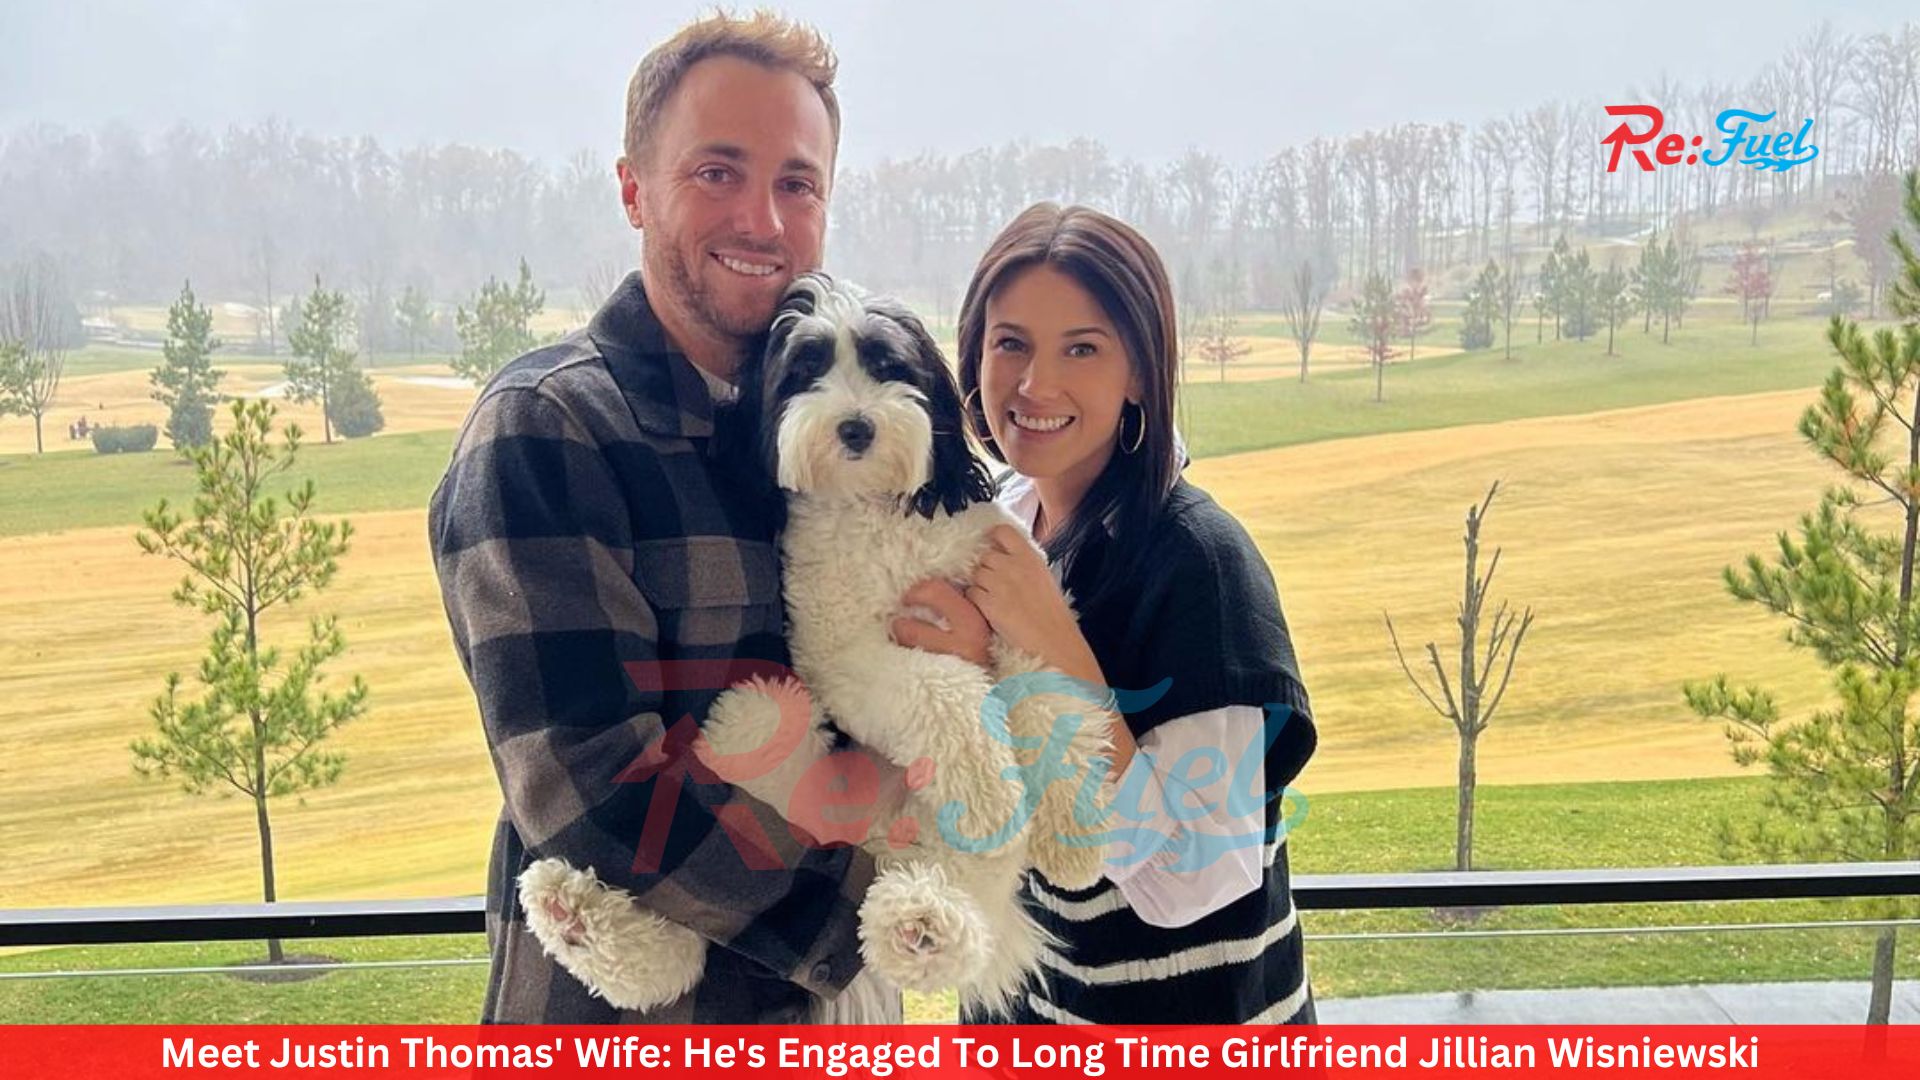 Meet Justin Thomas' Wife: He's Engaged To Long Time Girlfriend Jillian Wisniewski